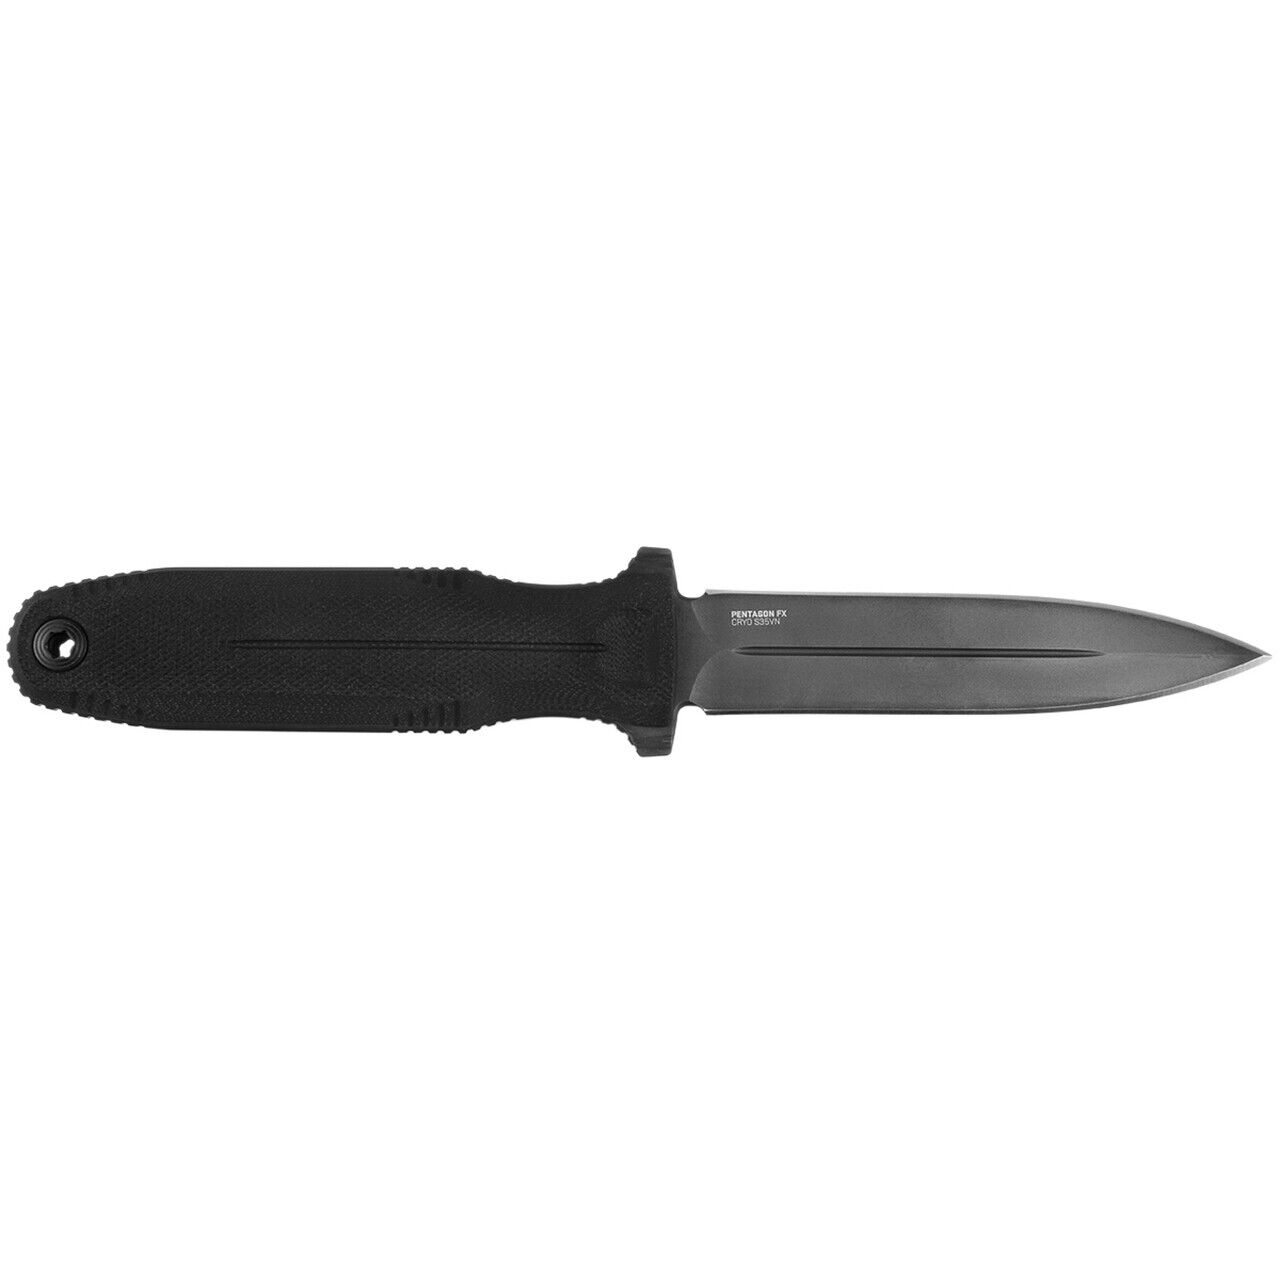 SOG Knives Pentagon FX Black G-10 CRYO CPM S35VN Steel 17-61-01-57